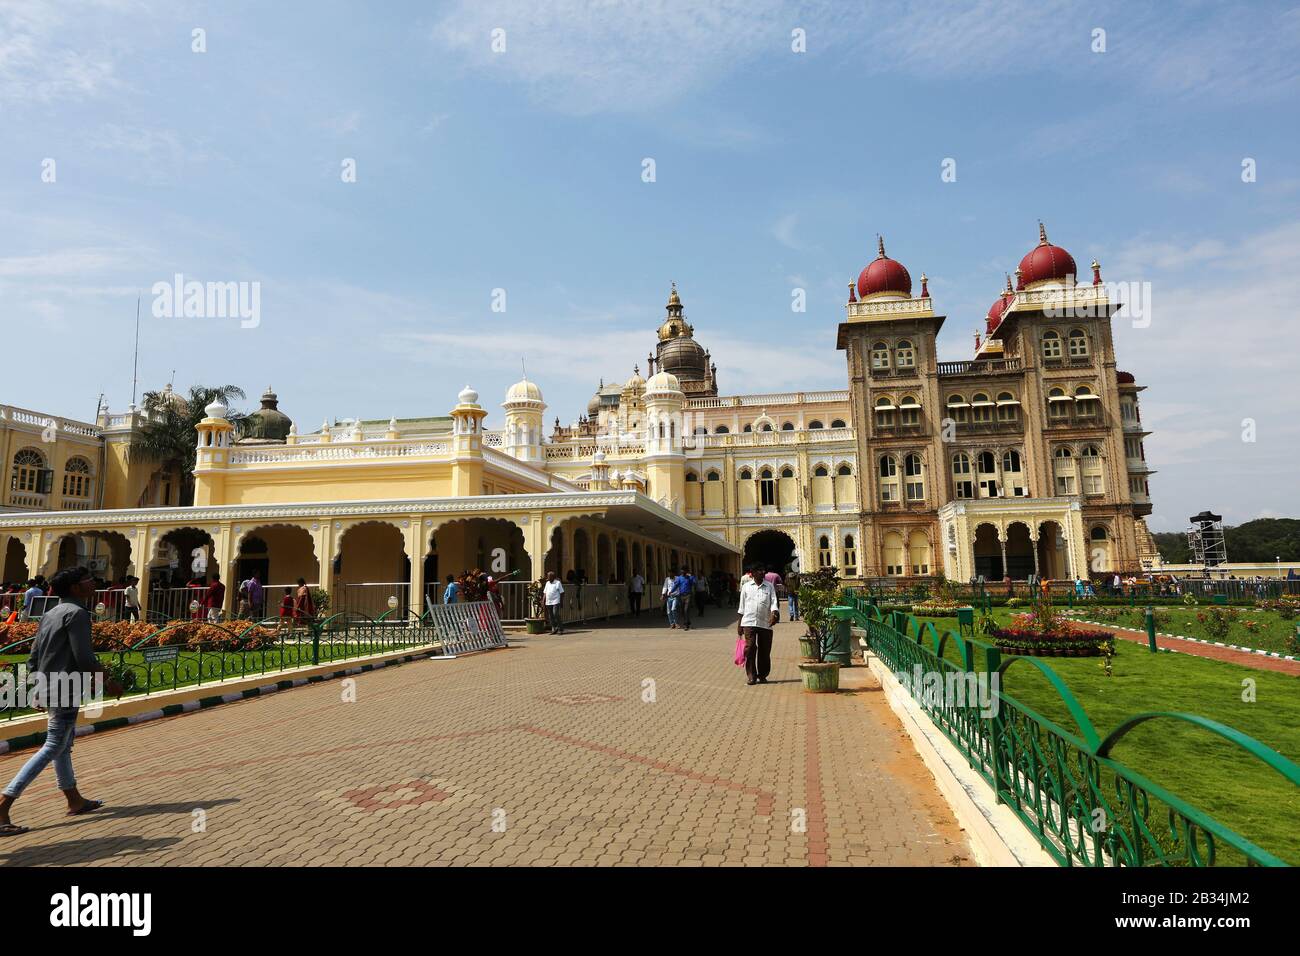 24 Novembre 2017, Palazzo Di Mysore, Palazzo Ambavilas, Mysore, Karnataka India. Residenza ufficiale dei Wodeyars - governanti di Mysore Foto Stock